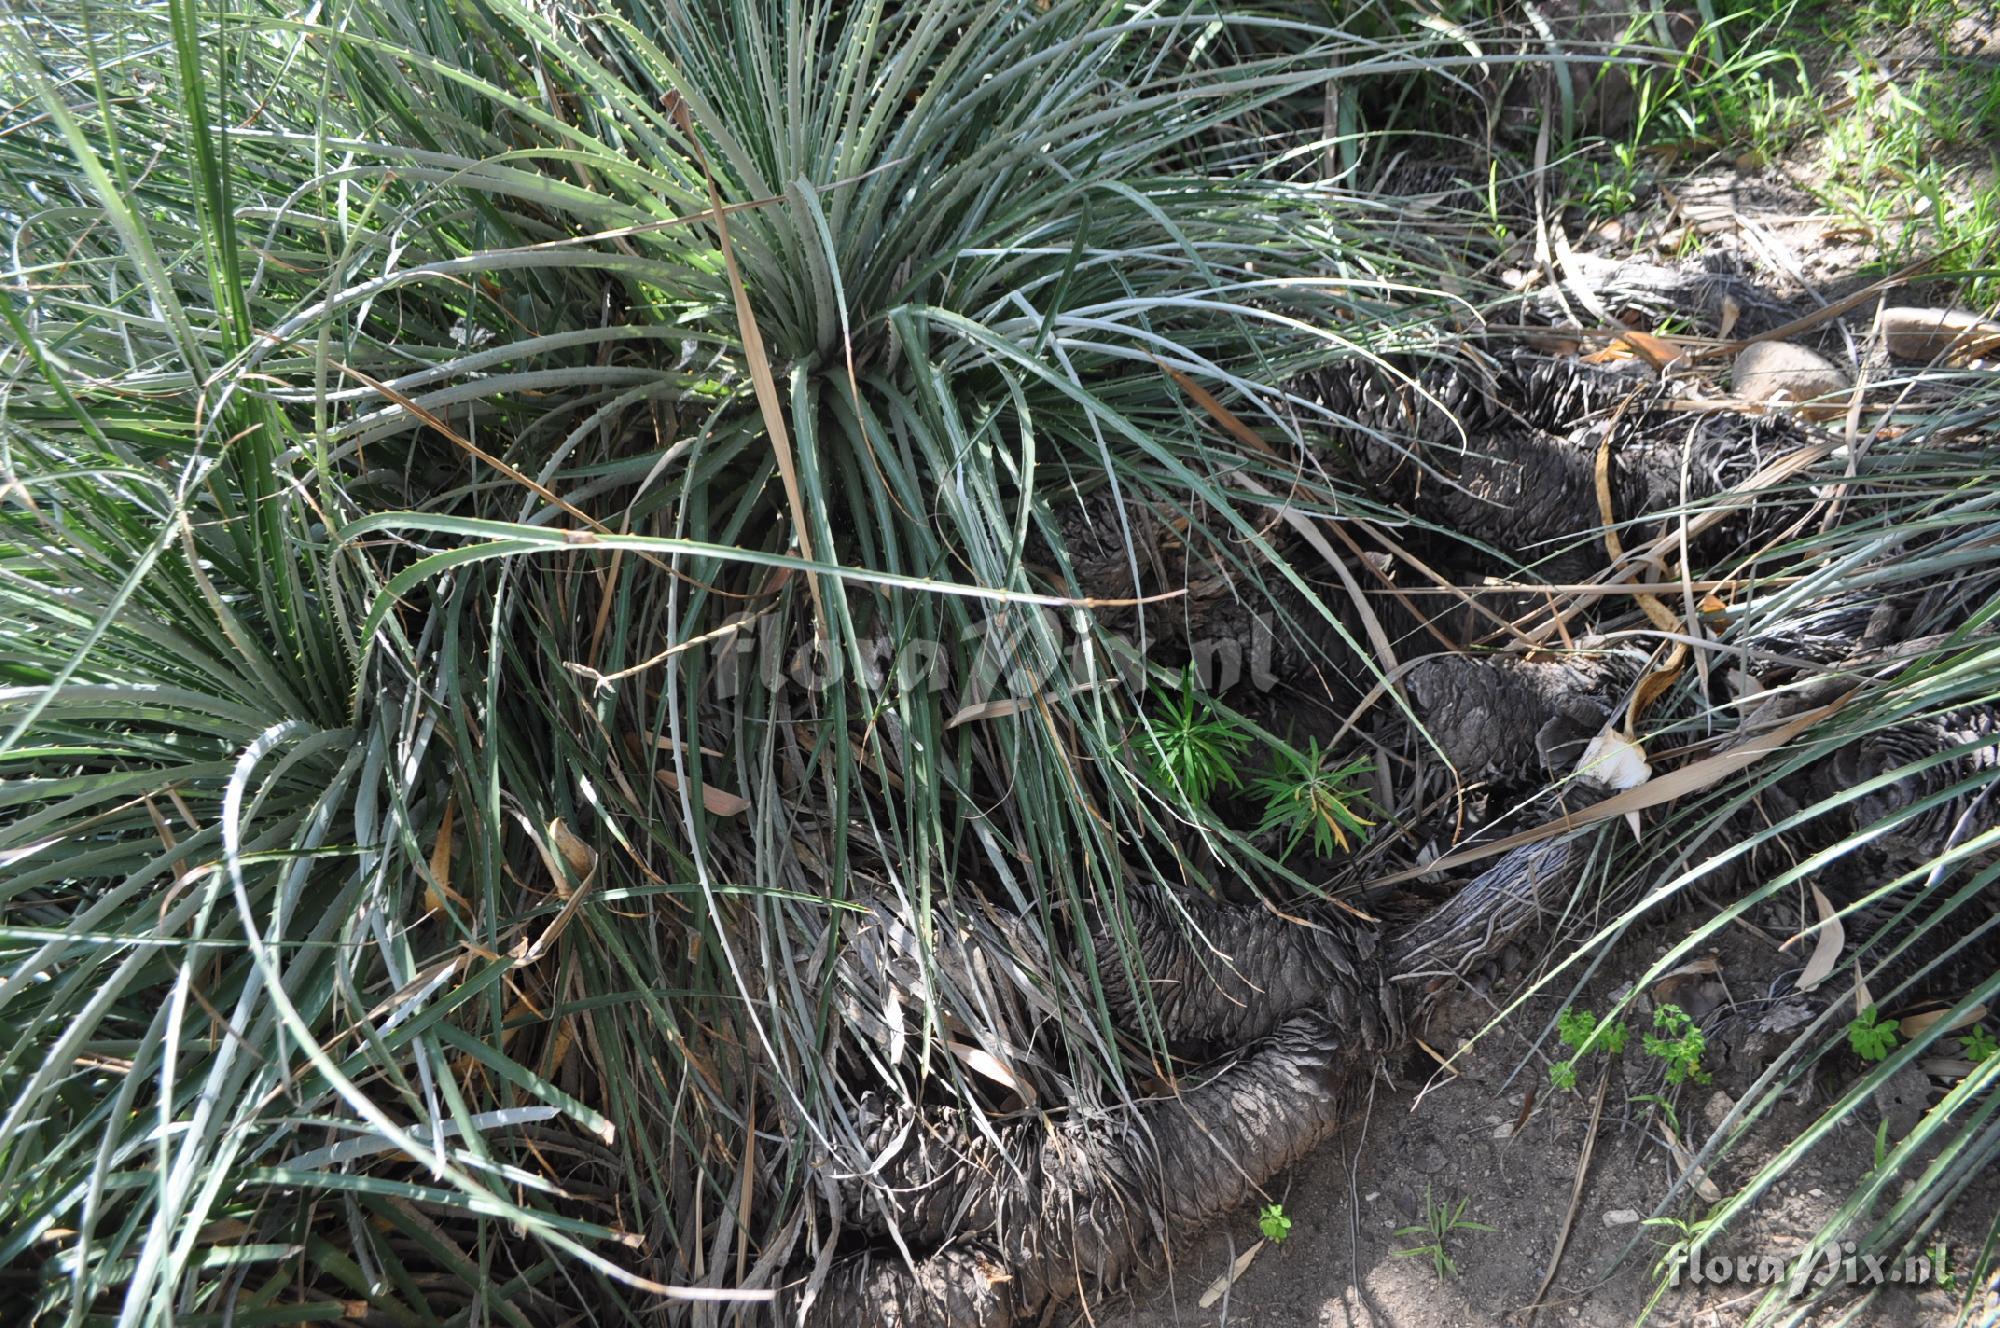 Puya wrightii - type plant